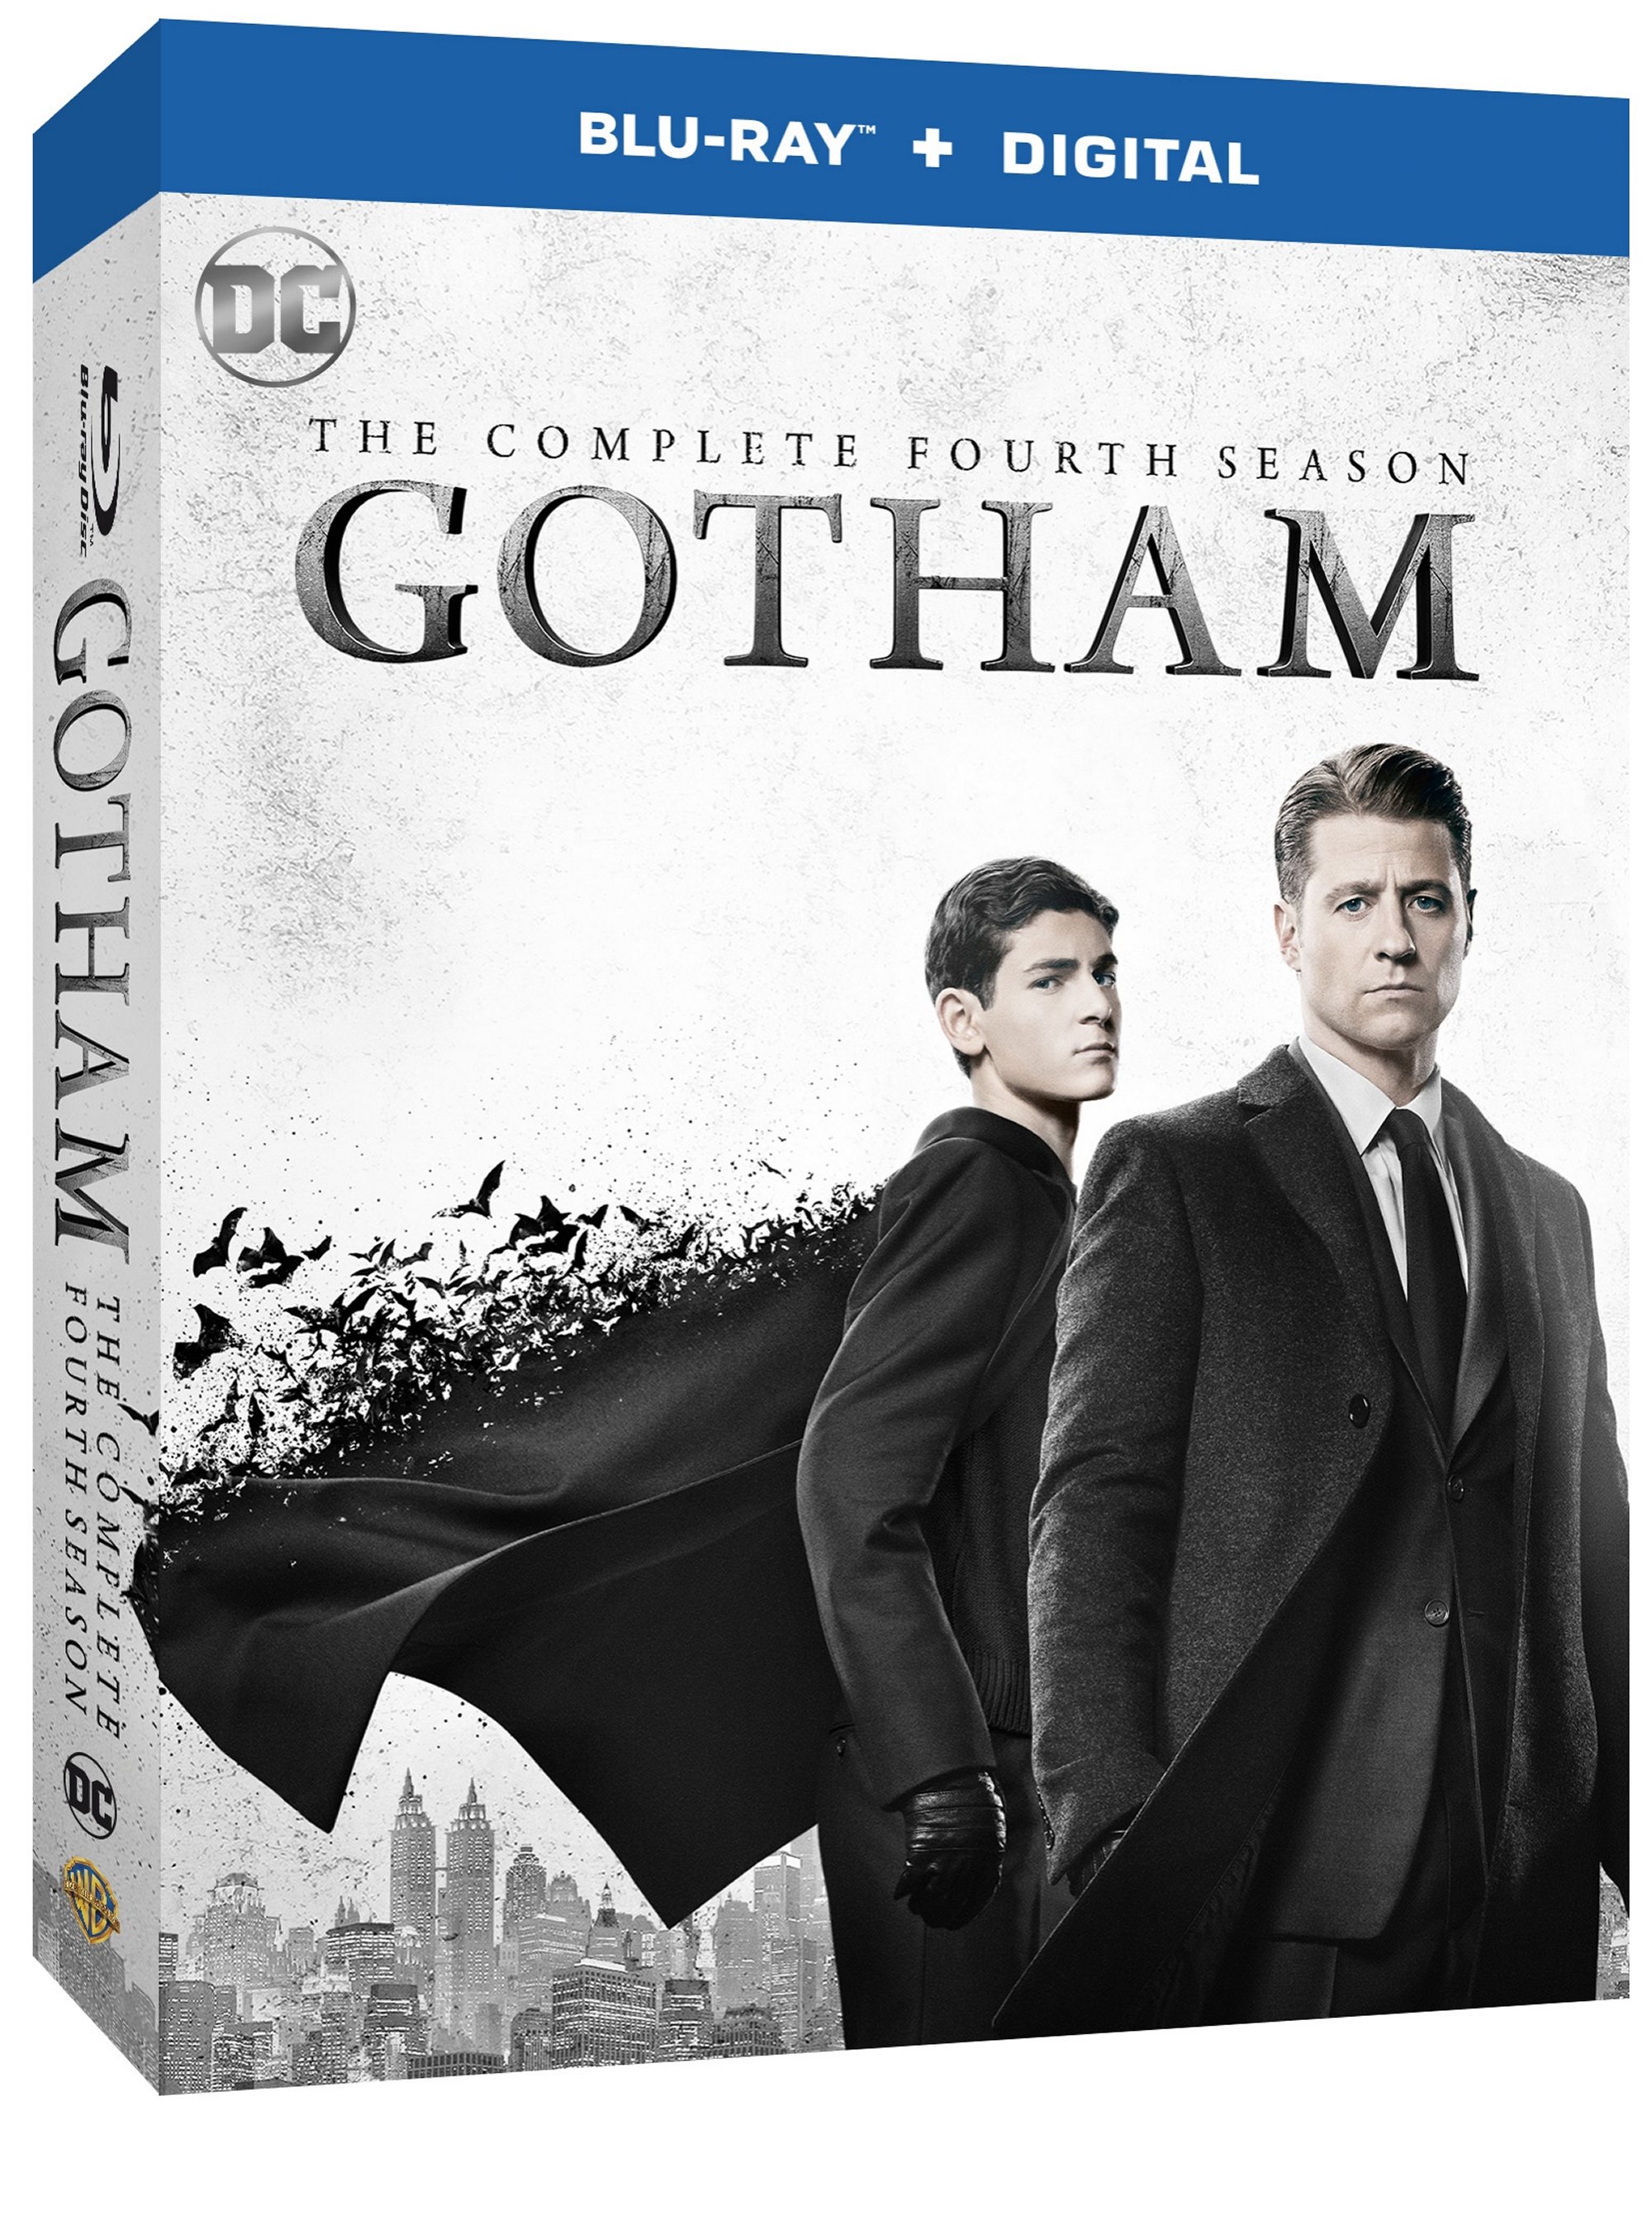 Gotham Season 4 Blu-ray and DVD release Warner Bros Home